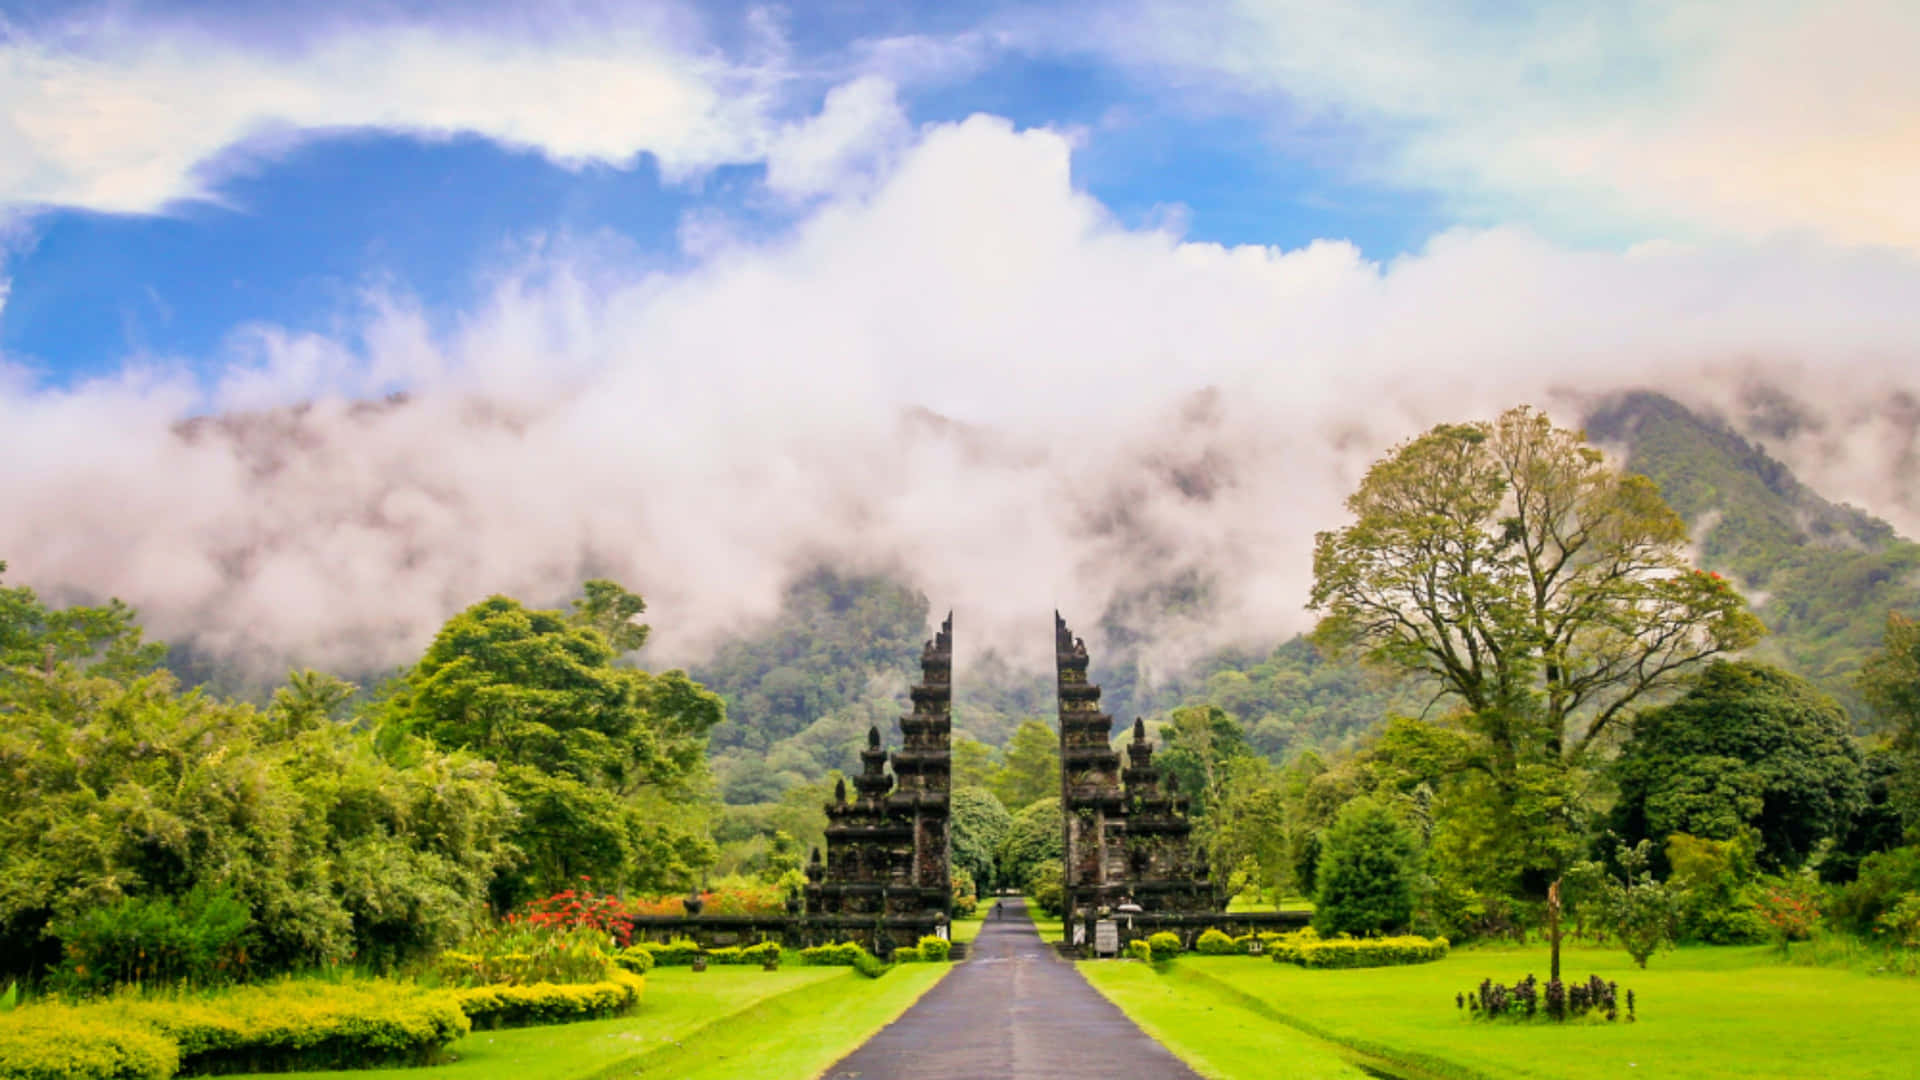 Majestic Balinese temple overlooking a serene lake and lush greenery